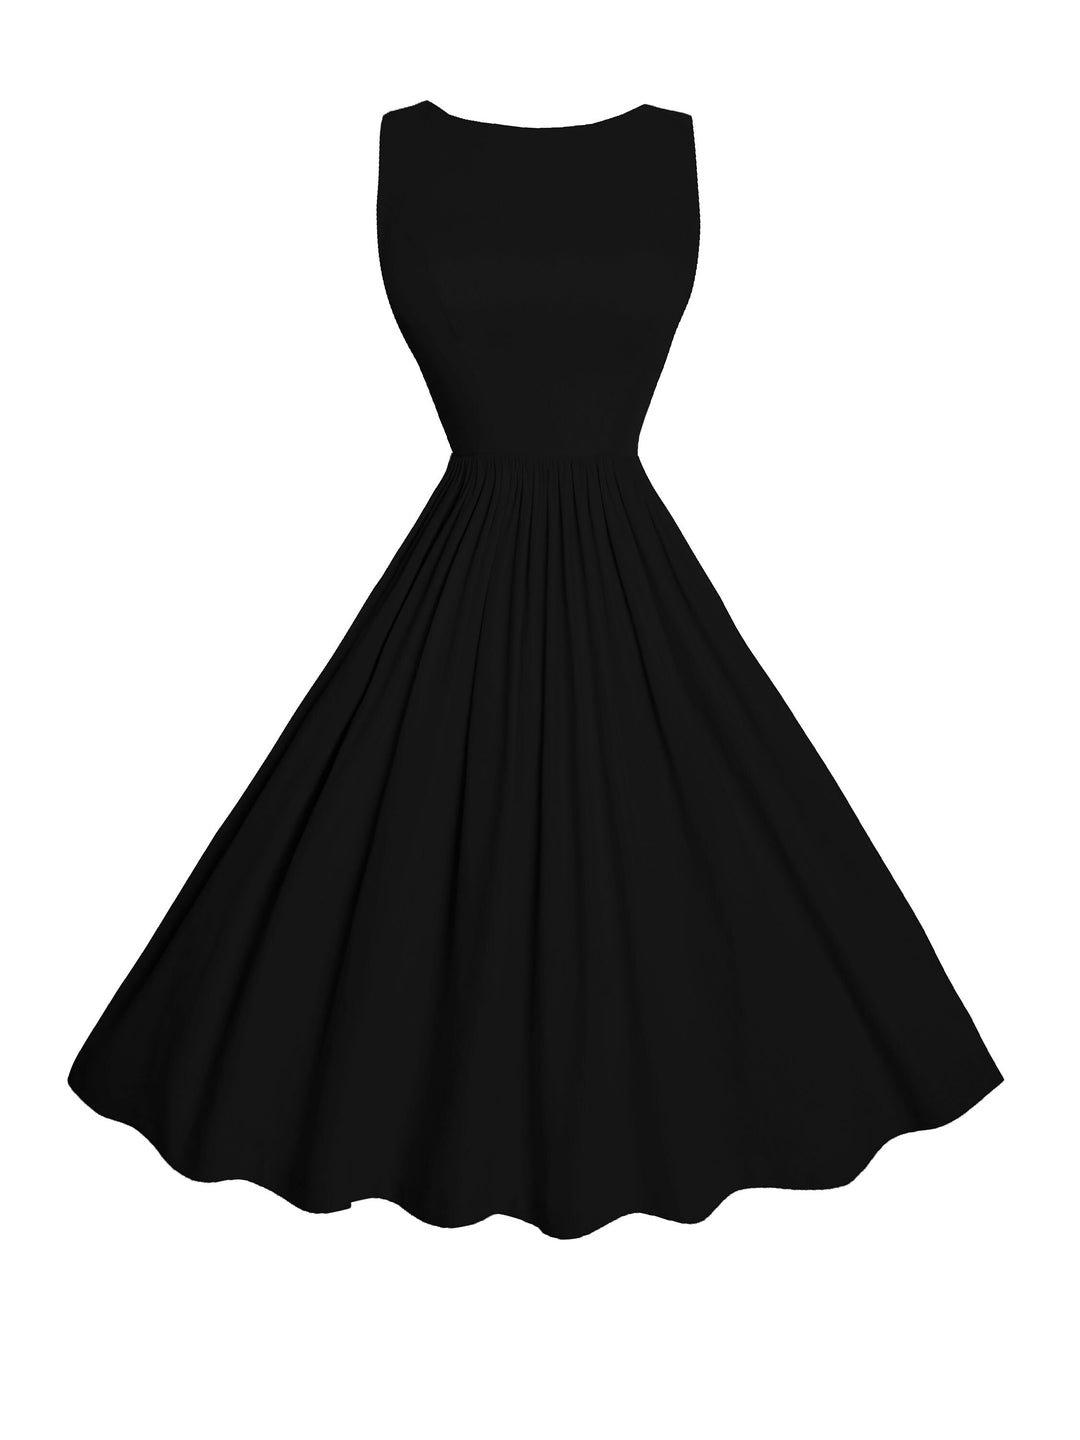 MTO - Audrey Dress in Midnight Black Linen